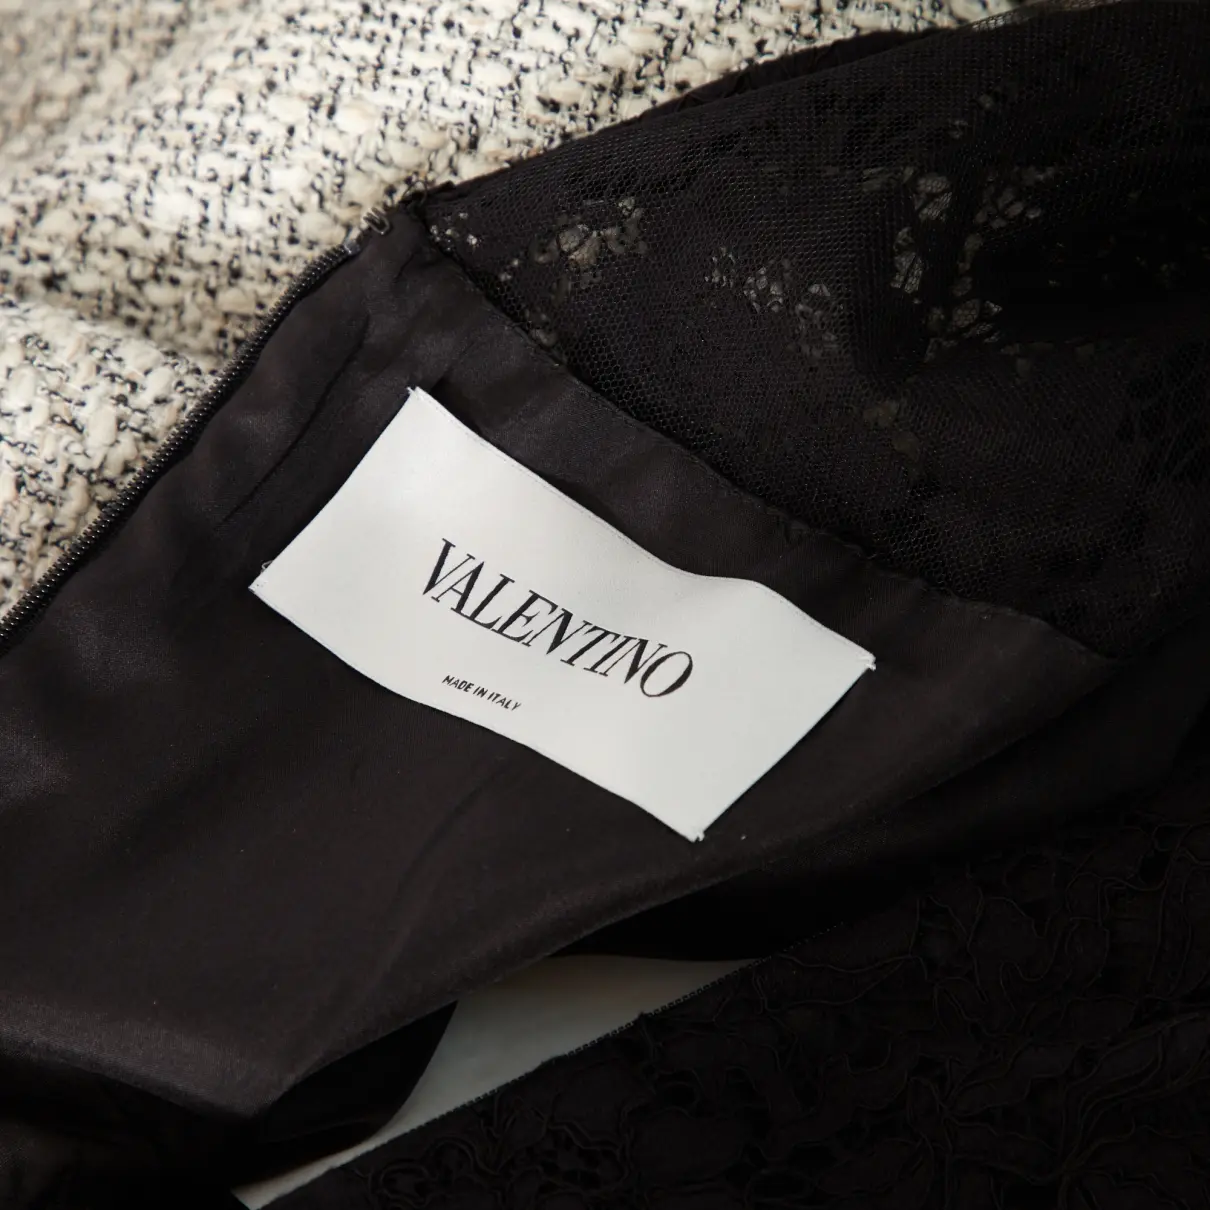 Buy Valentino Garavani Mid-length dress online